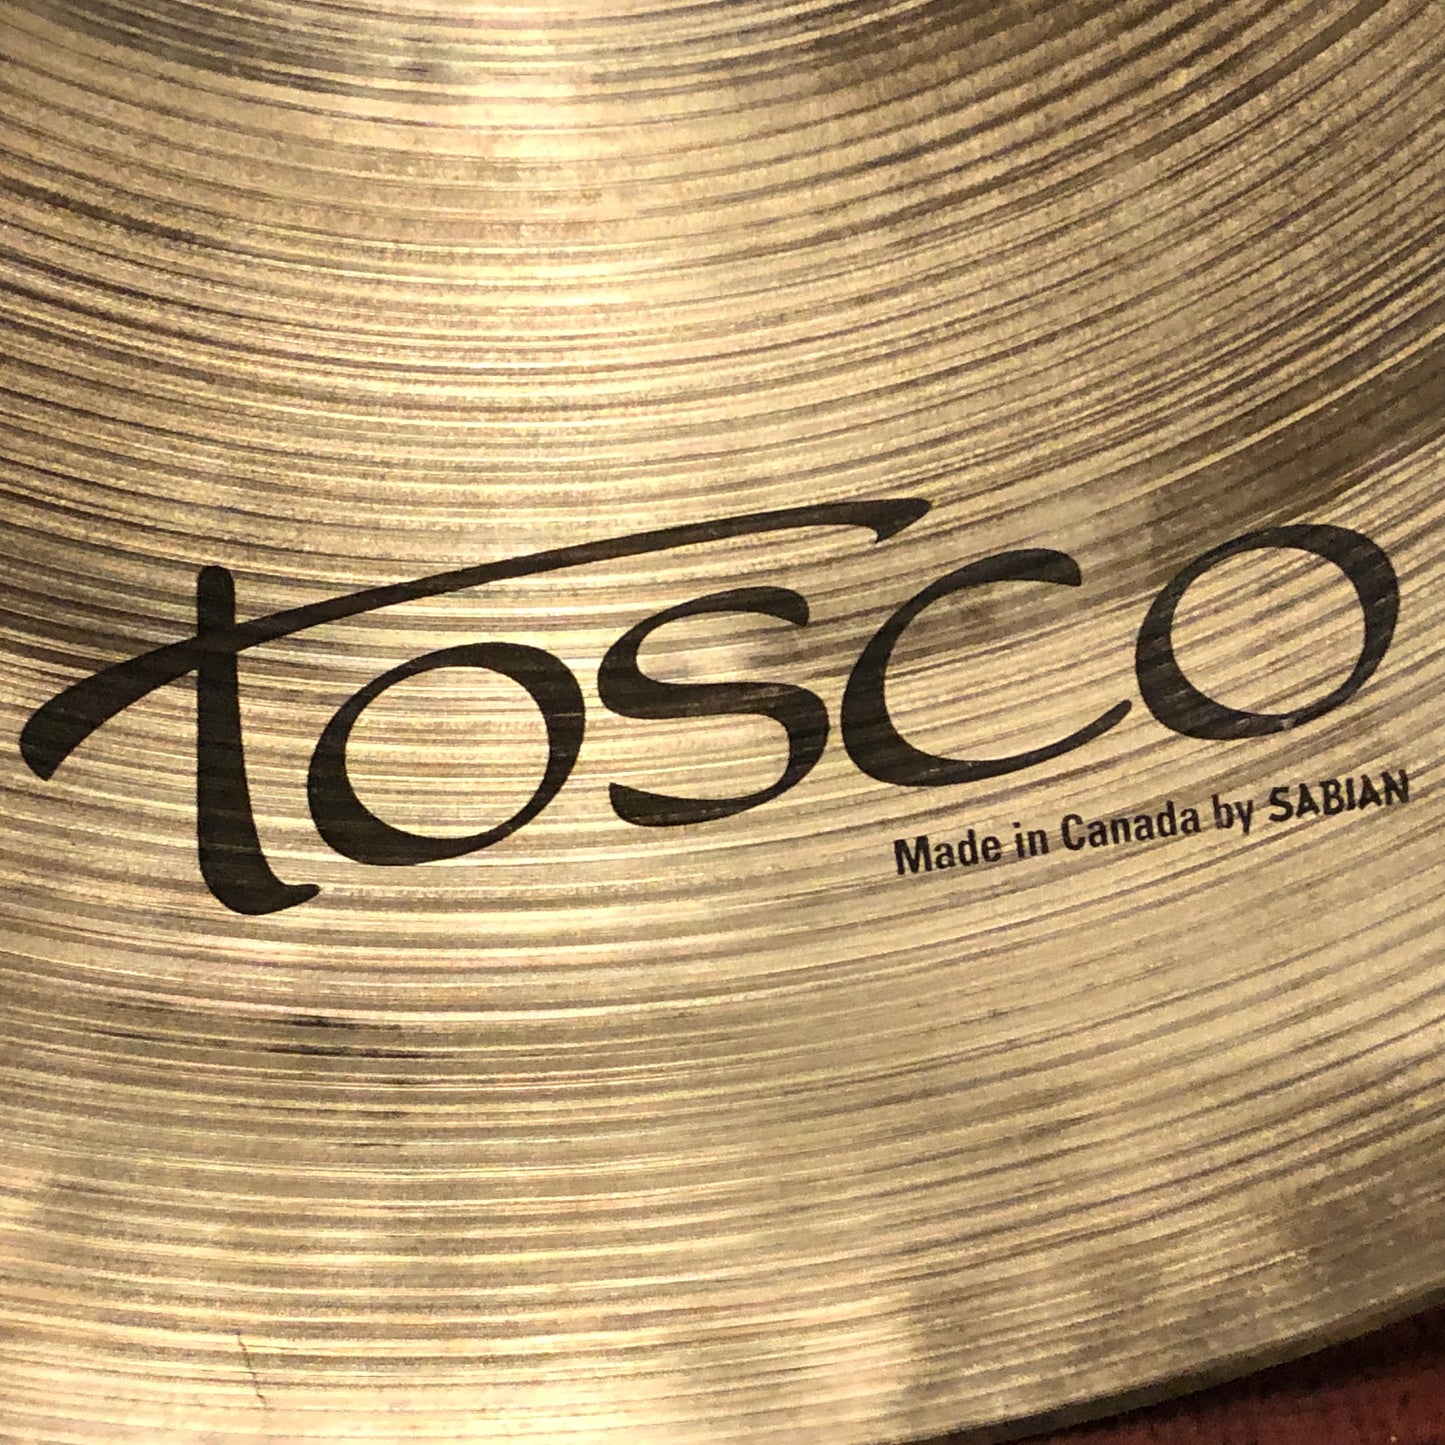 22" Tosco by Sabian Ride Cymbal Canada 3136g